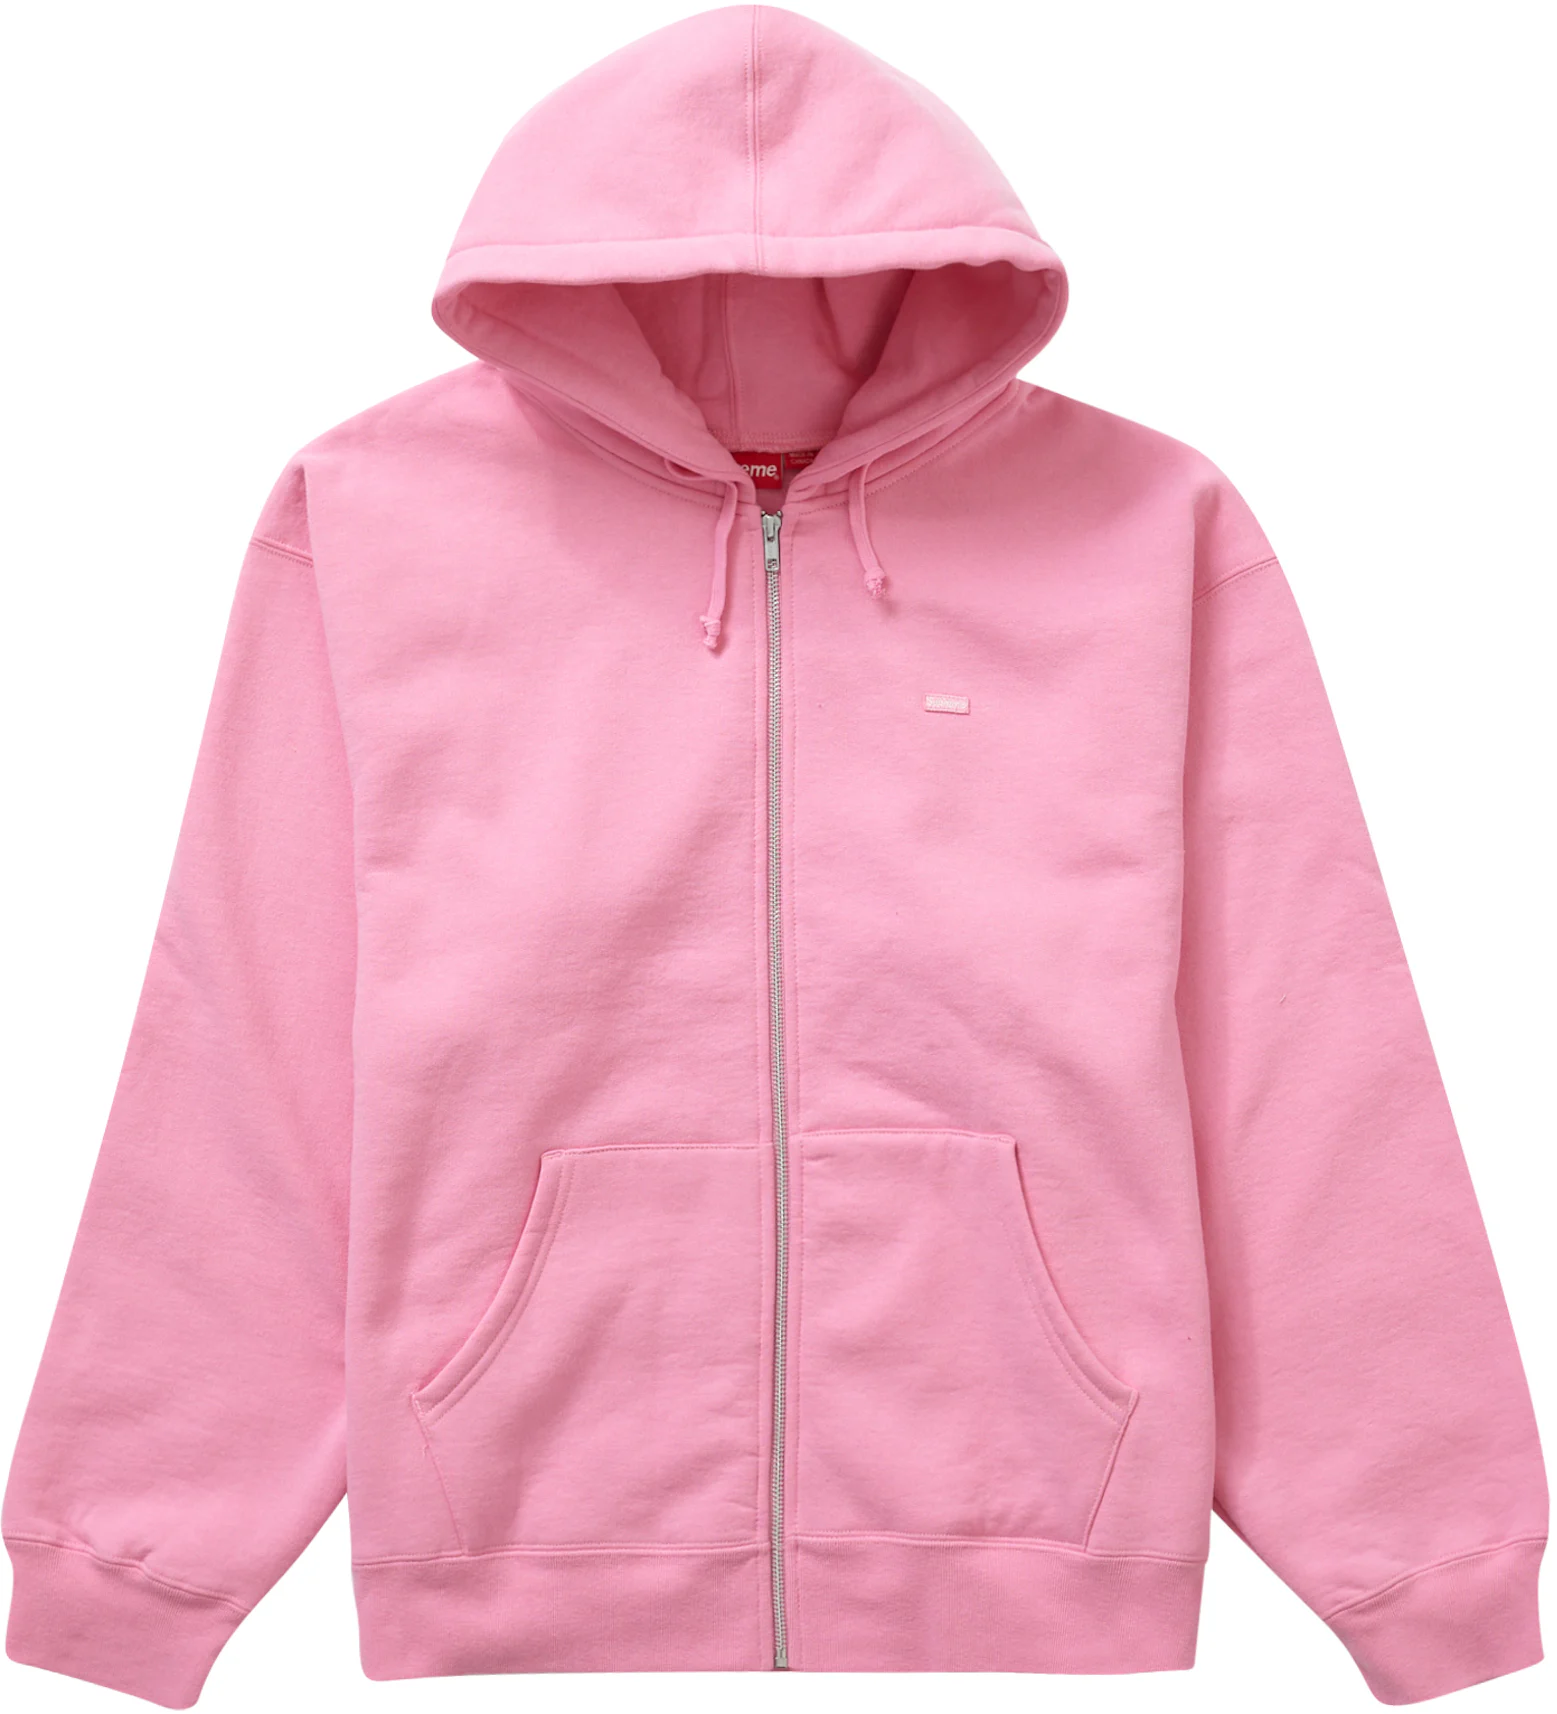 Buy Supreme Bling Box Logo Hooded Sweatshirt 'Light Pink' - SS22SW57 LIGHT  PINK